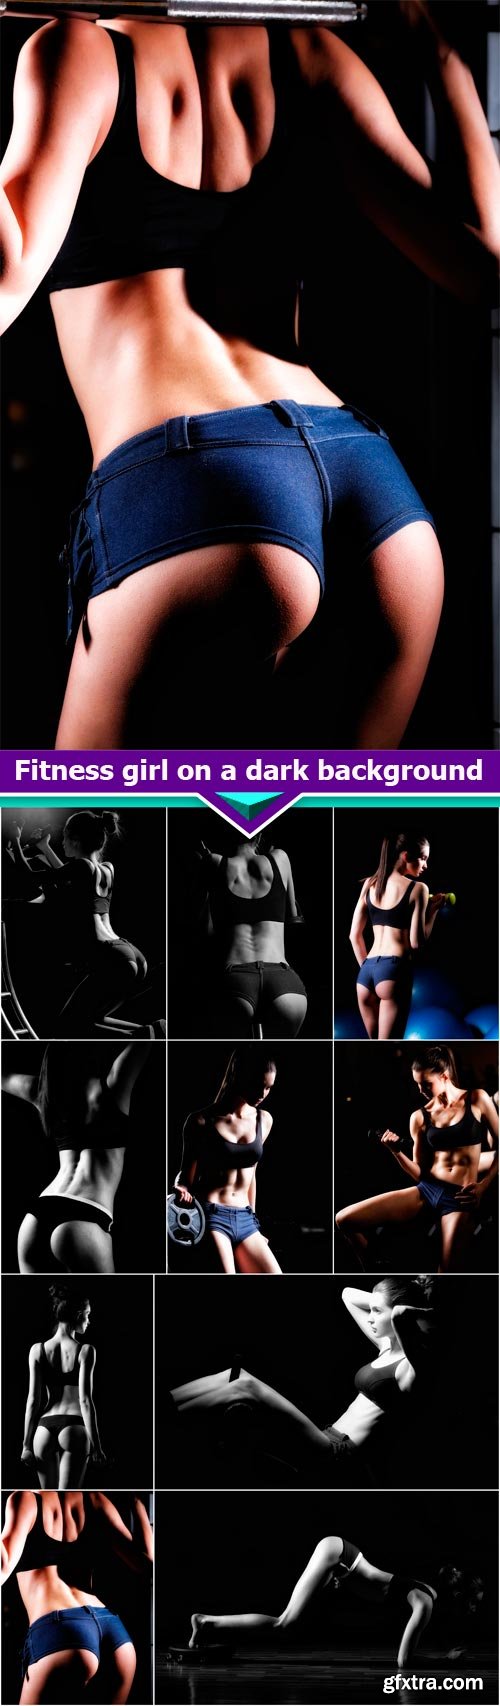 Fitness girl on a dark background 10X JPEG